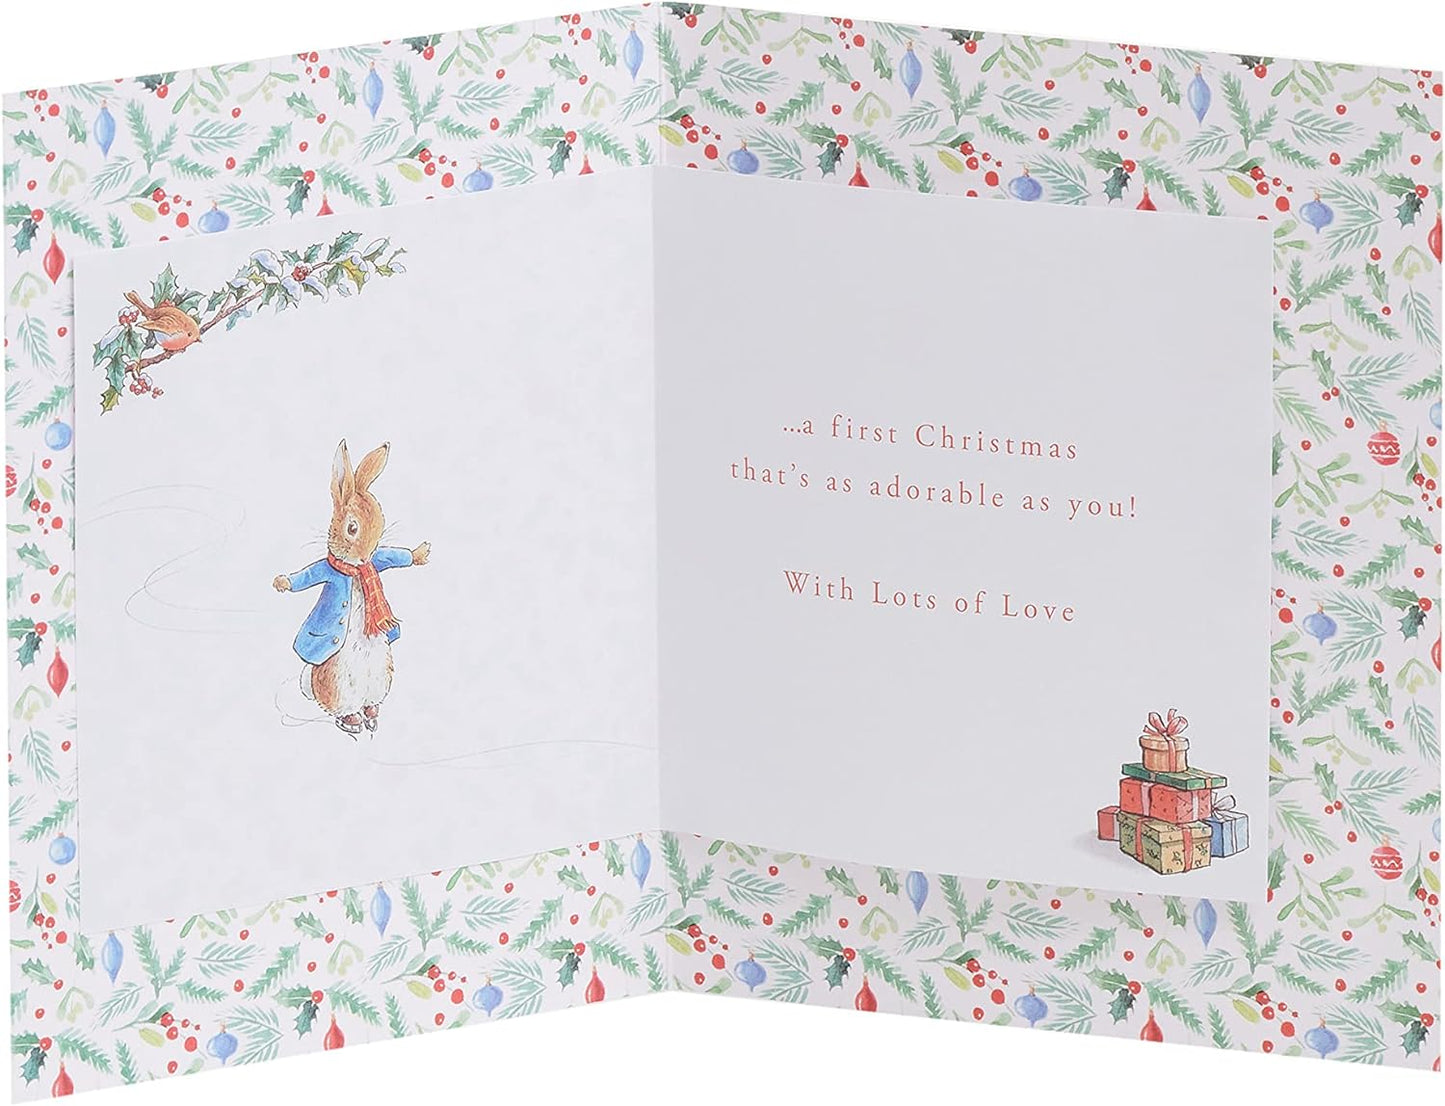 Grandson's 1st Christmas Card Sweet Peter Rabbit Design 